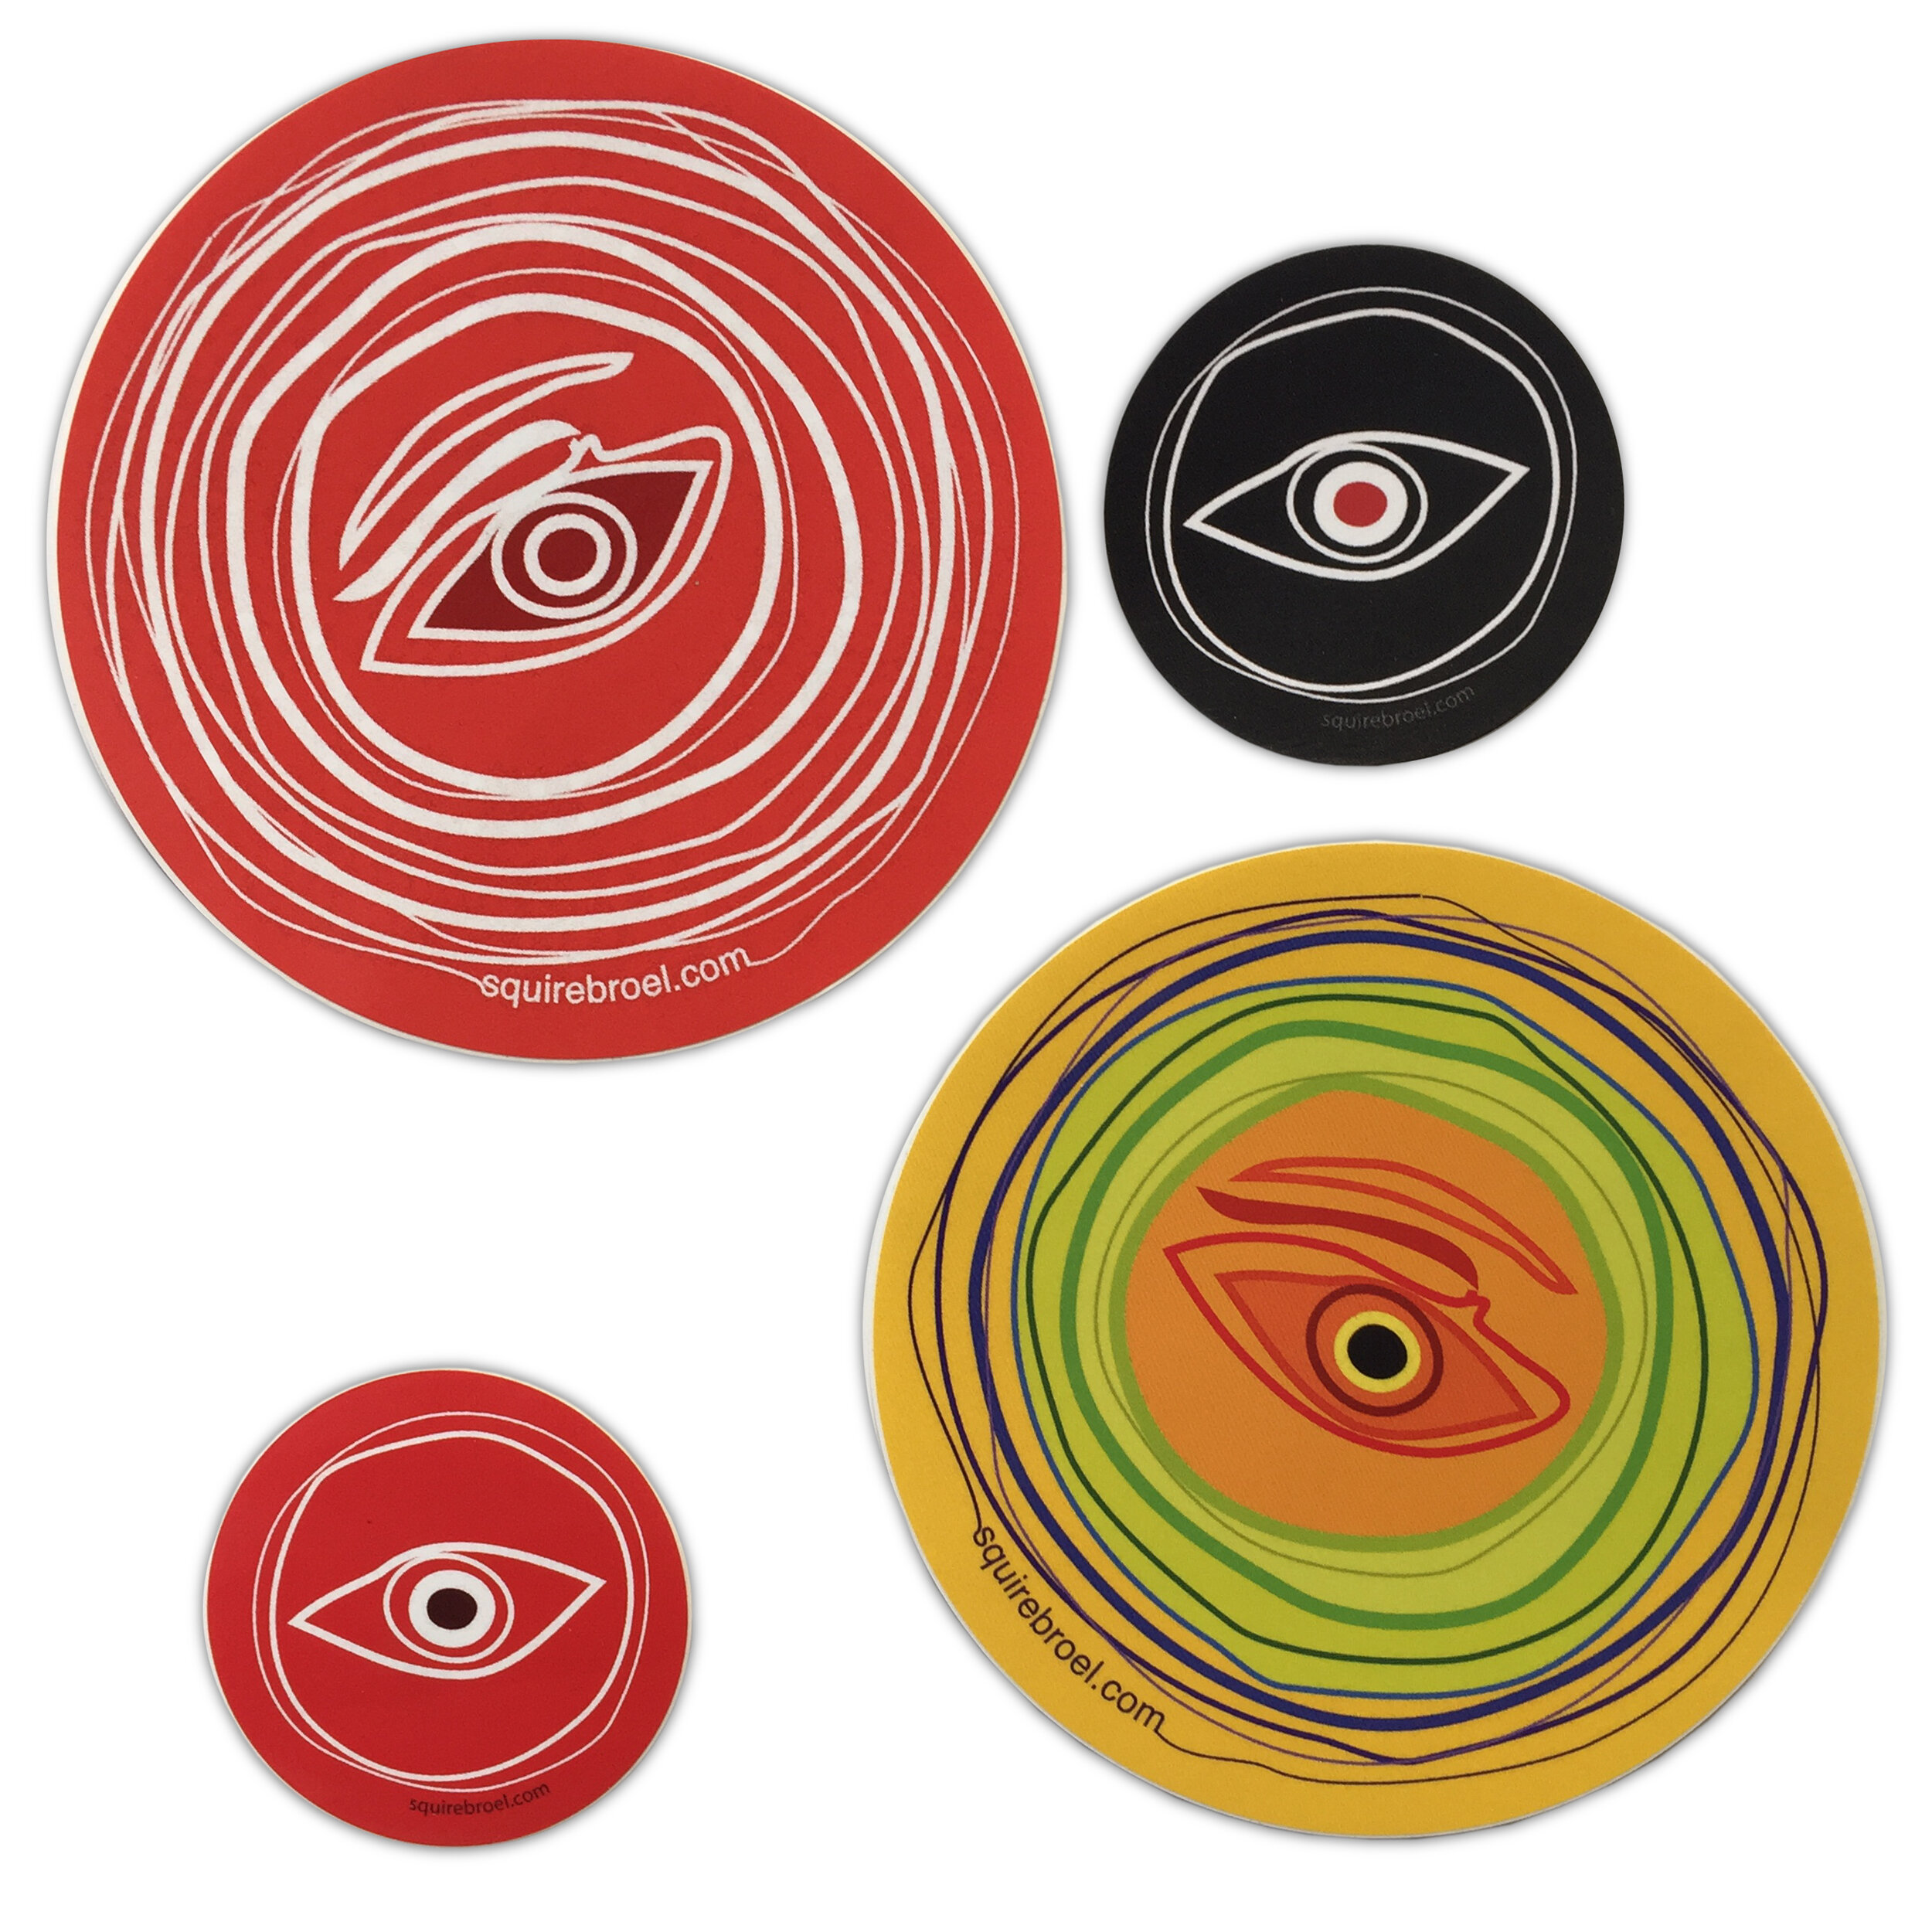 Simihaze Beauty - Eye Play Angel Pack Stickers - Multicoloured